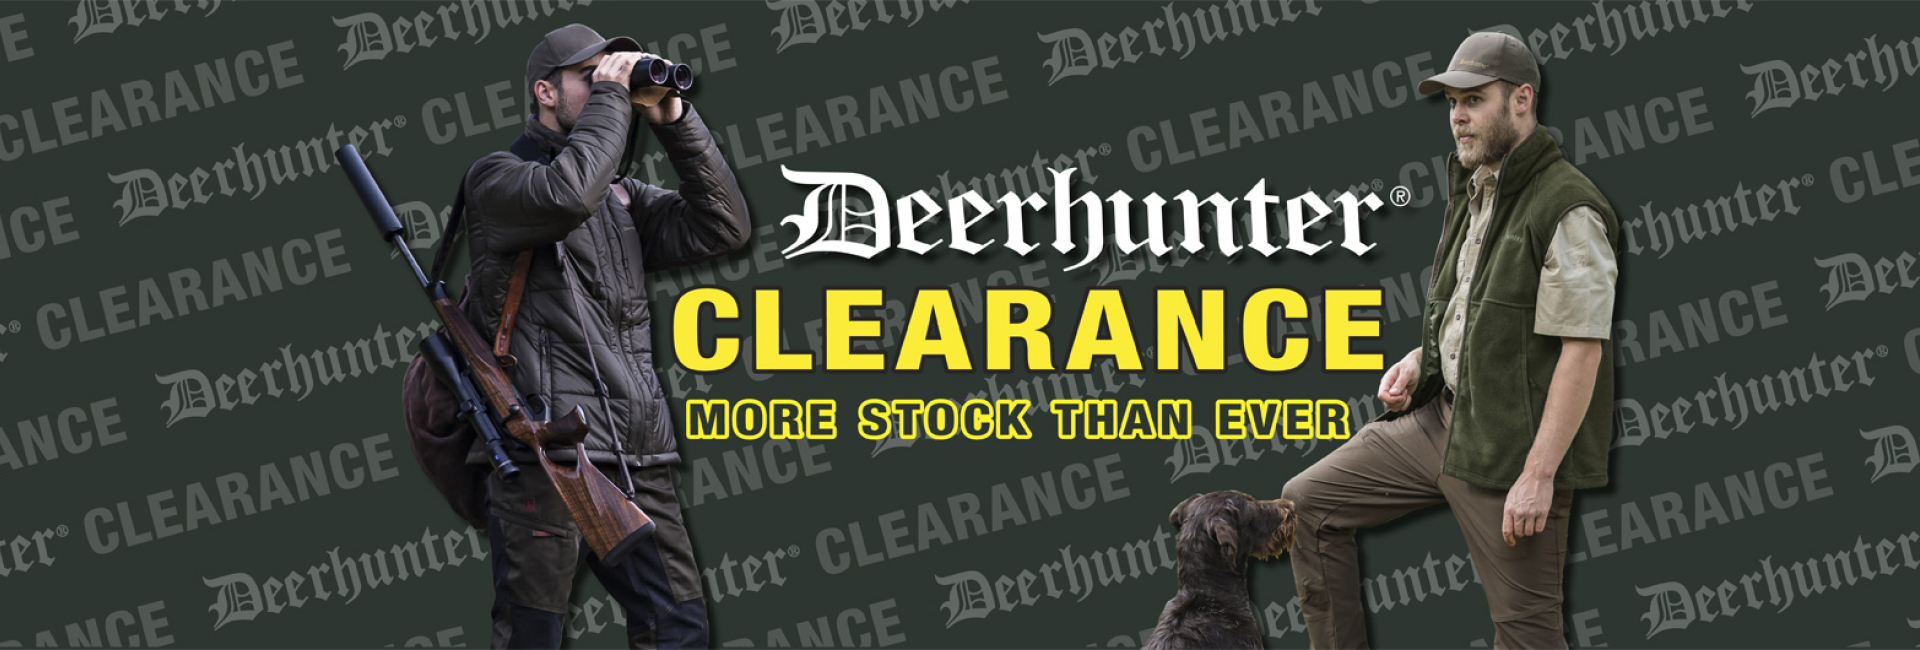 Deerhunter Clearance Nov-23